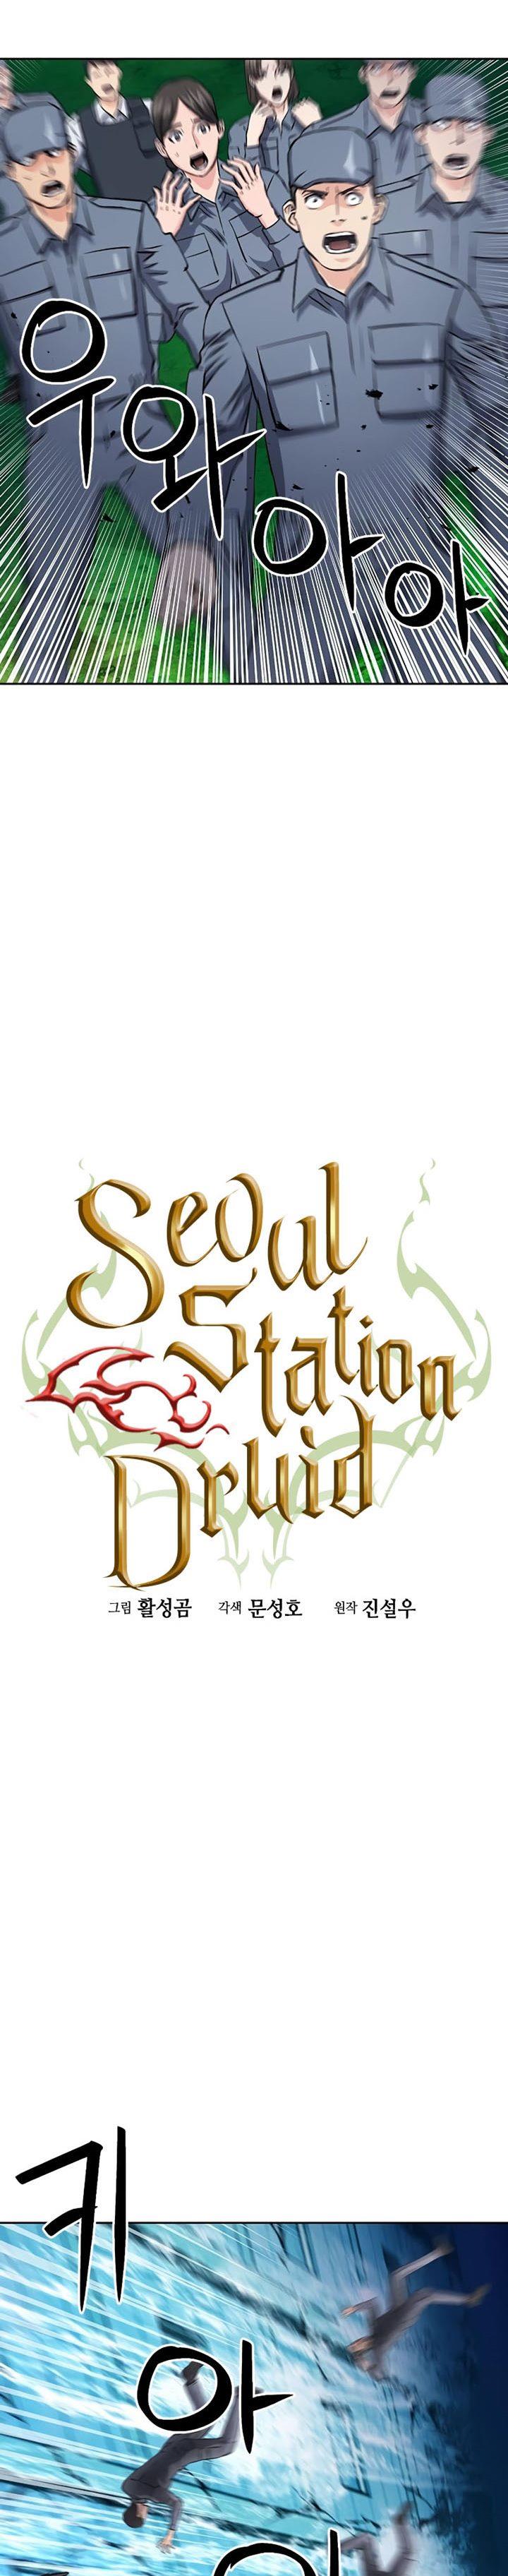 Seoul Station Druid Chapter 88